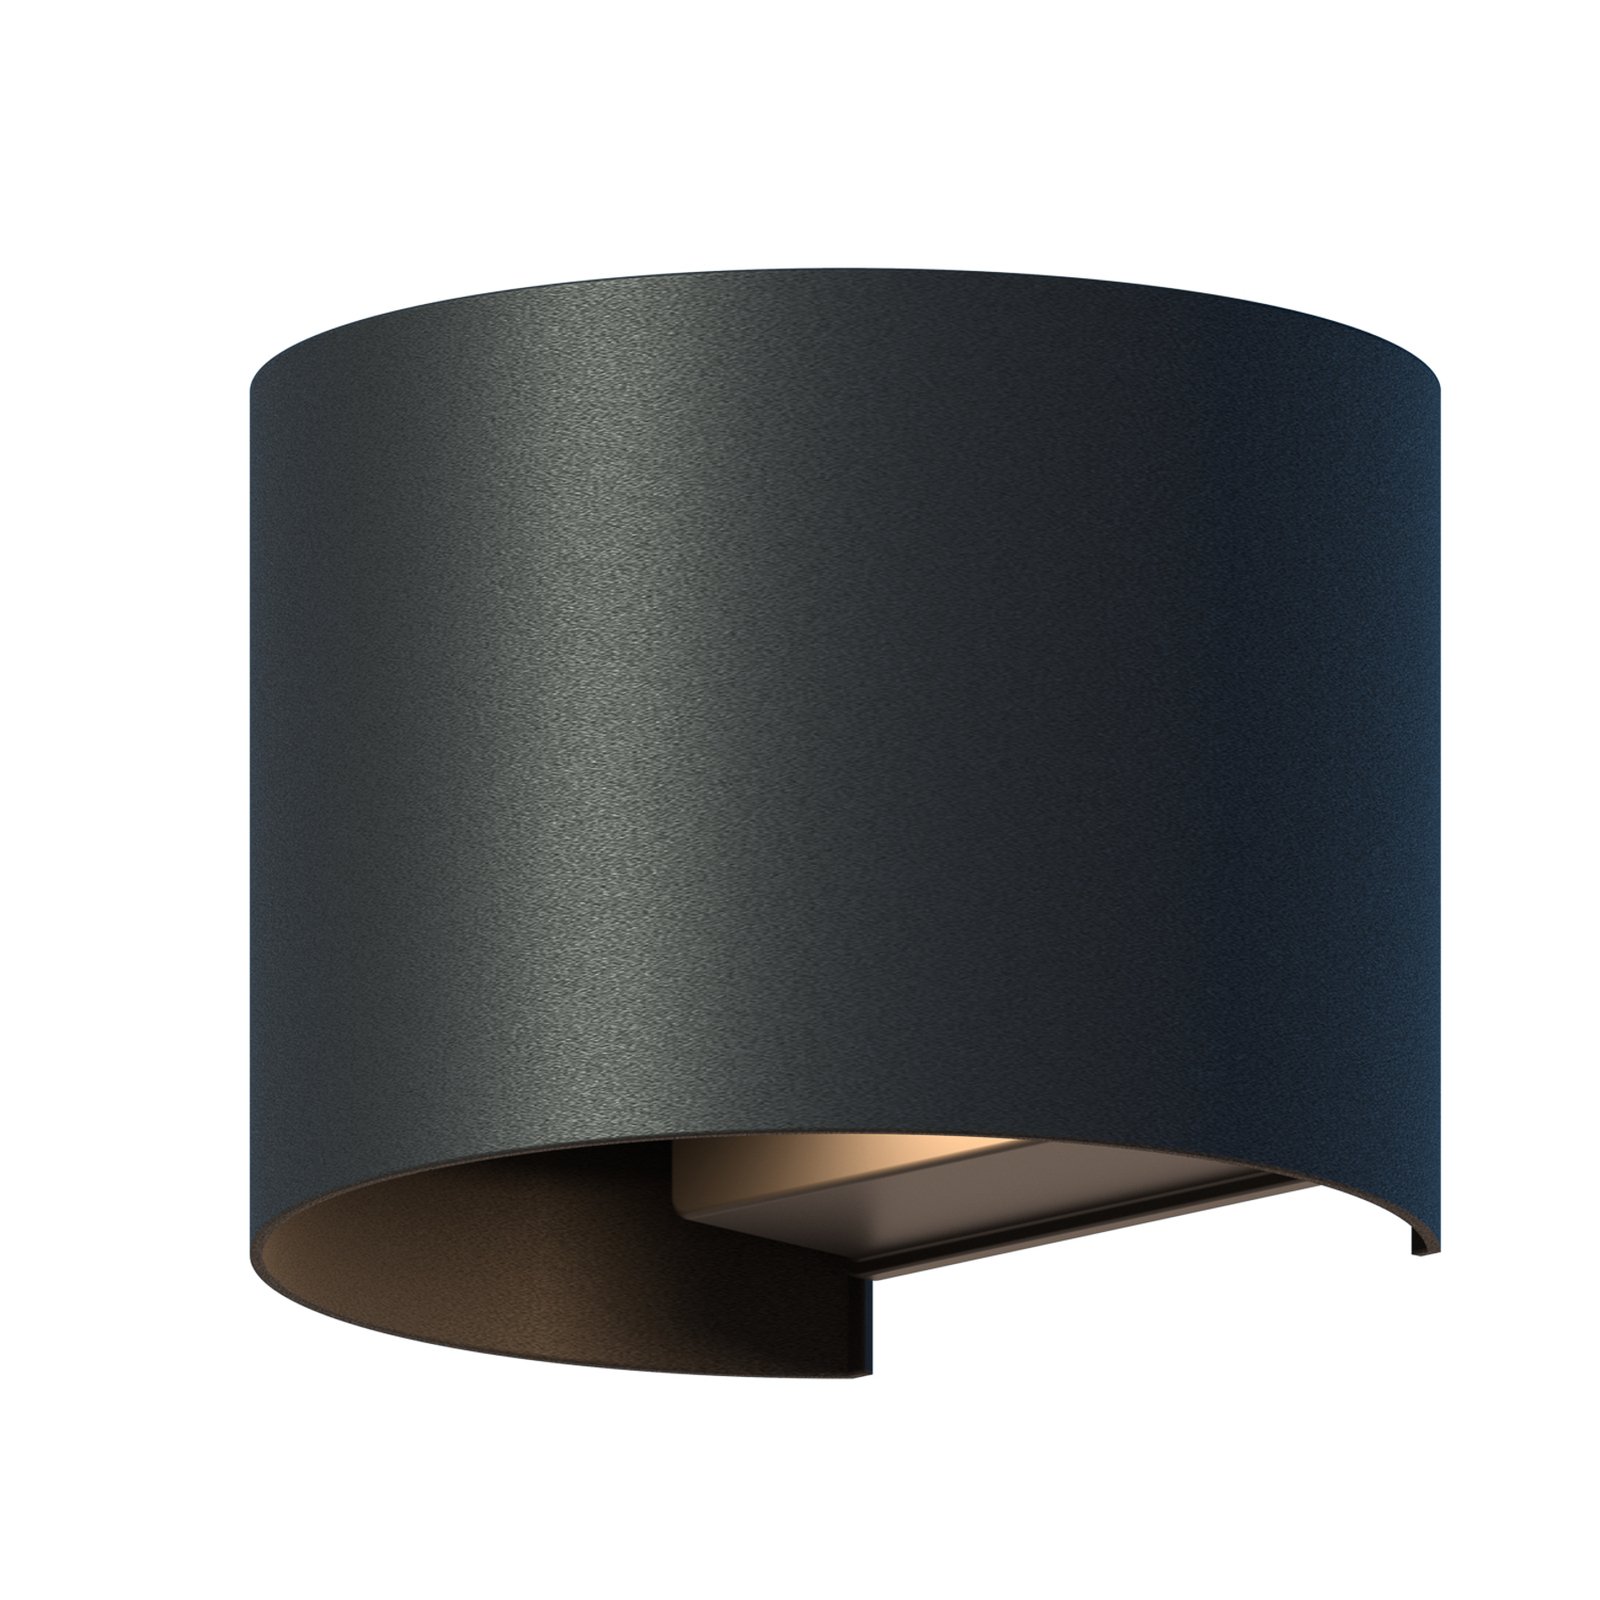 Calex LED utomhusvägglampa Oval, upp/ner, höjd 10 cm, svart